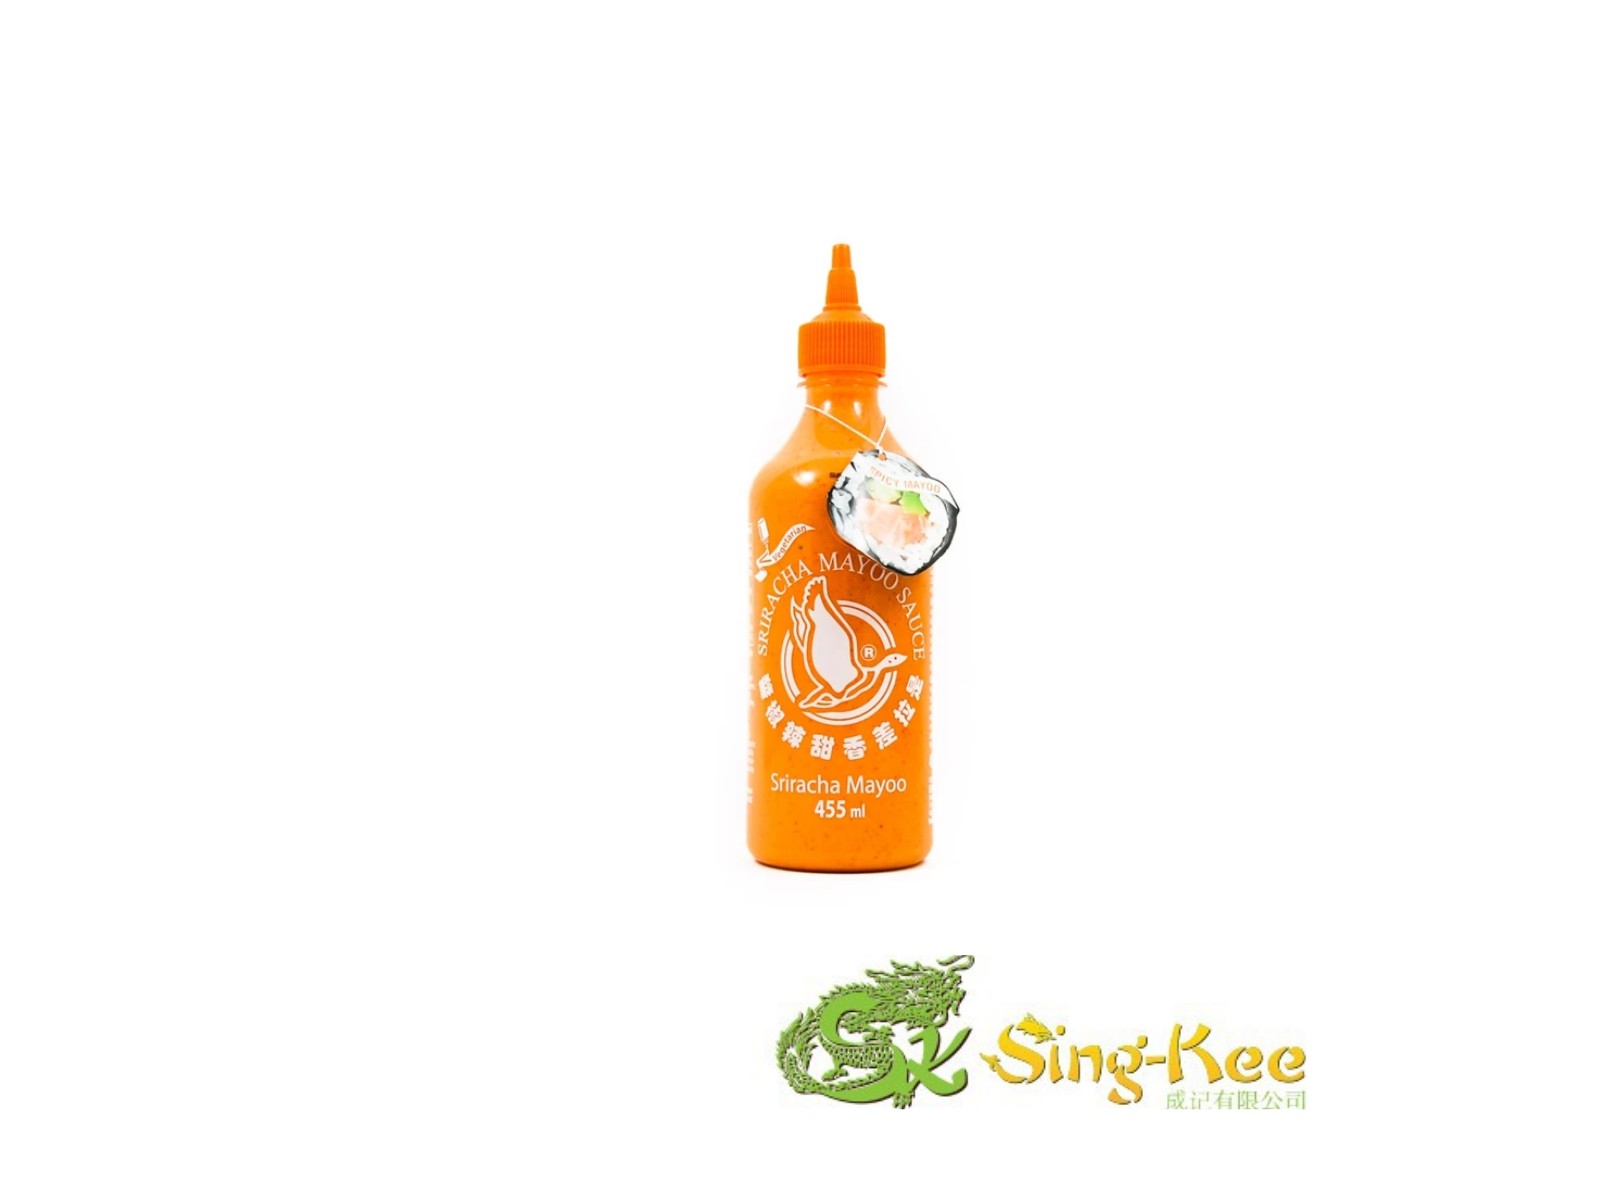 Flying Goose Brand Sriracha Mayo Sauce 455ml